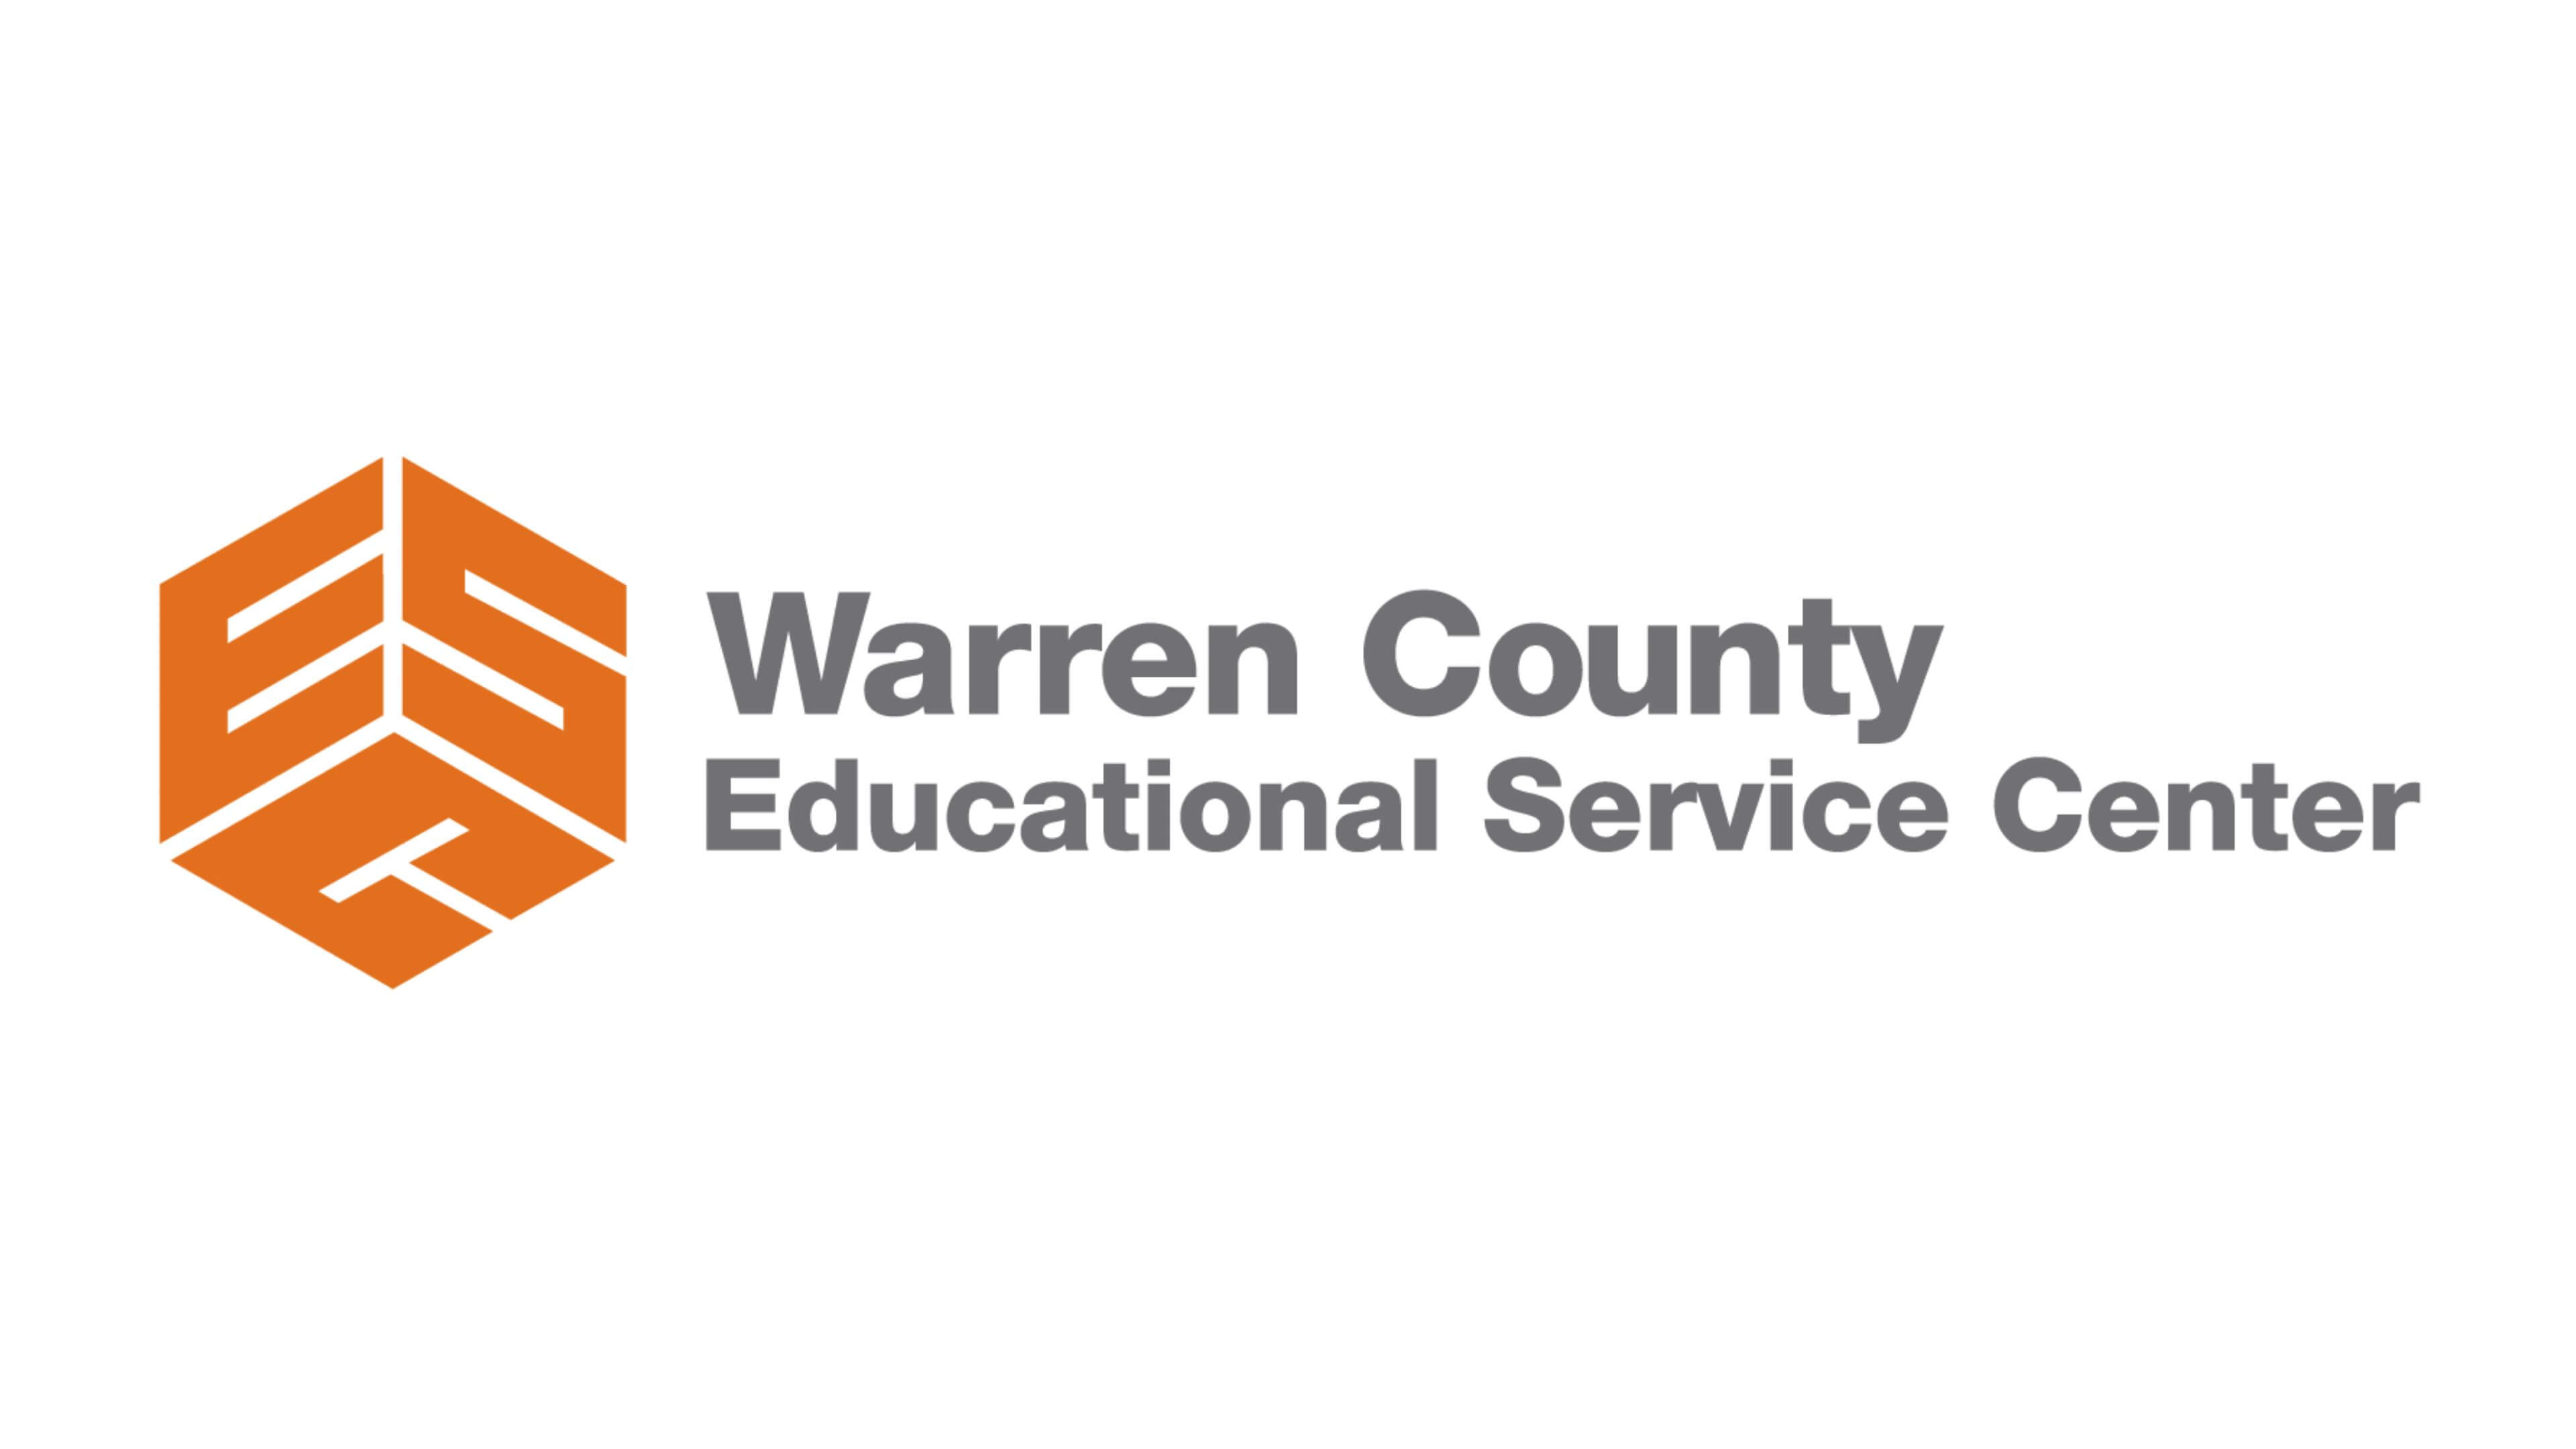 Warren County Educational Service Center